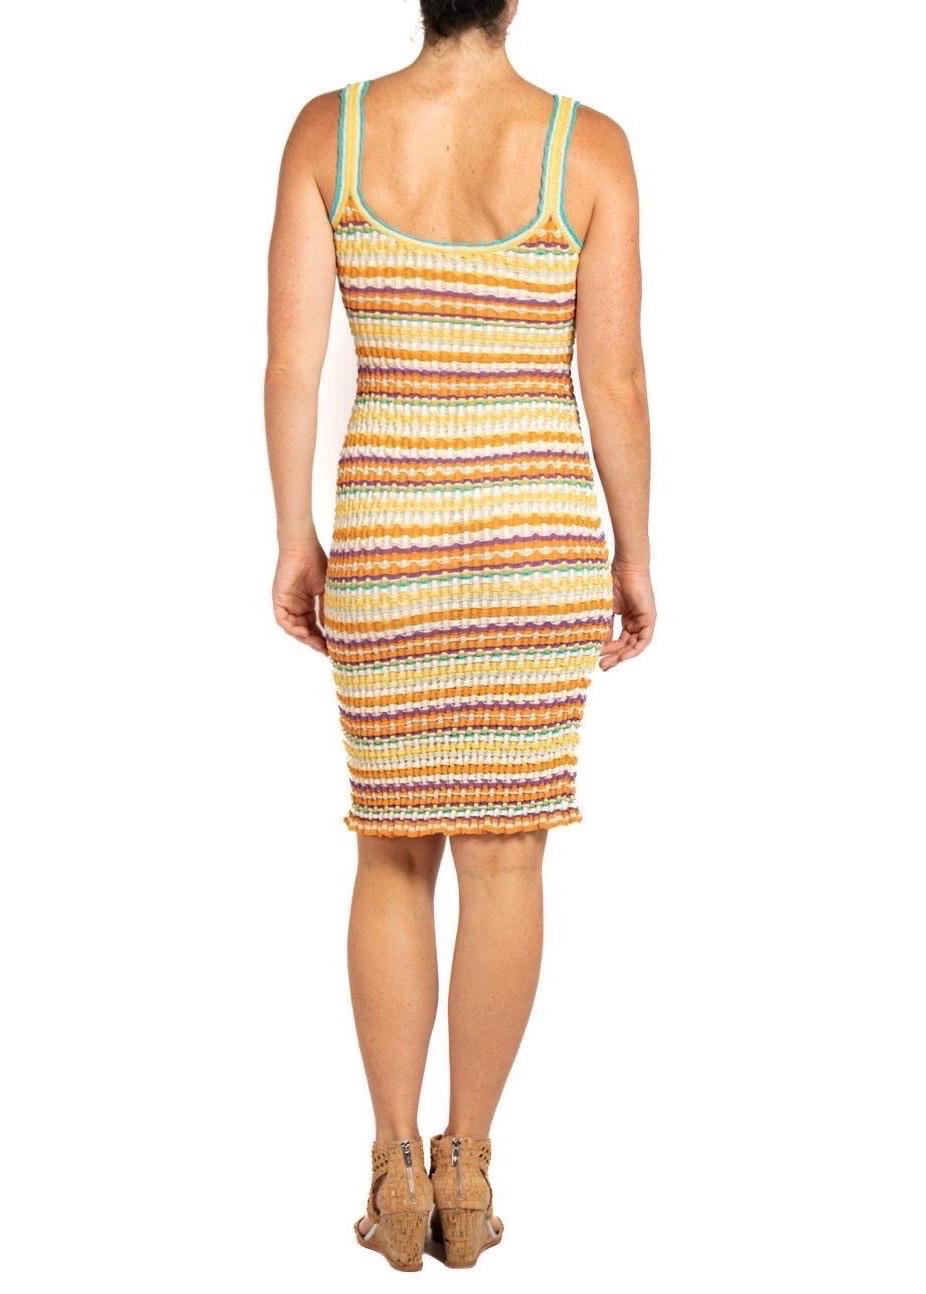 MISSONI Multi Colored Knit Stretch Dress For Sale 4